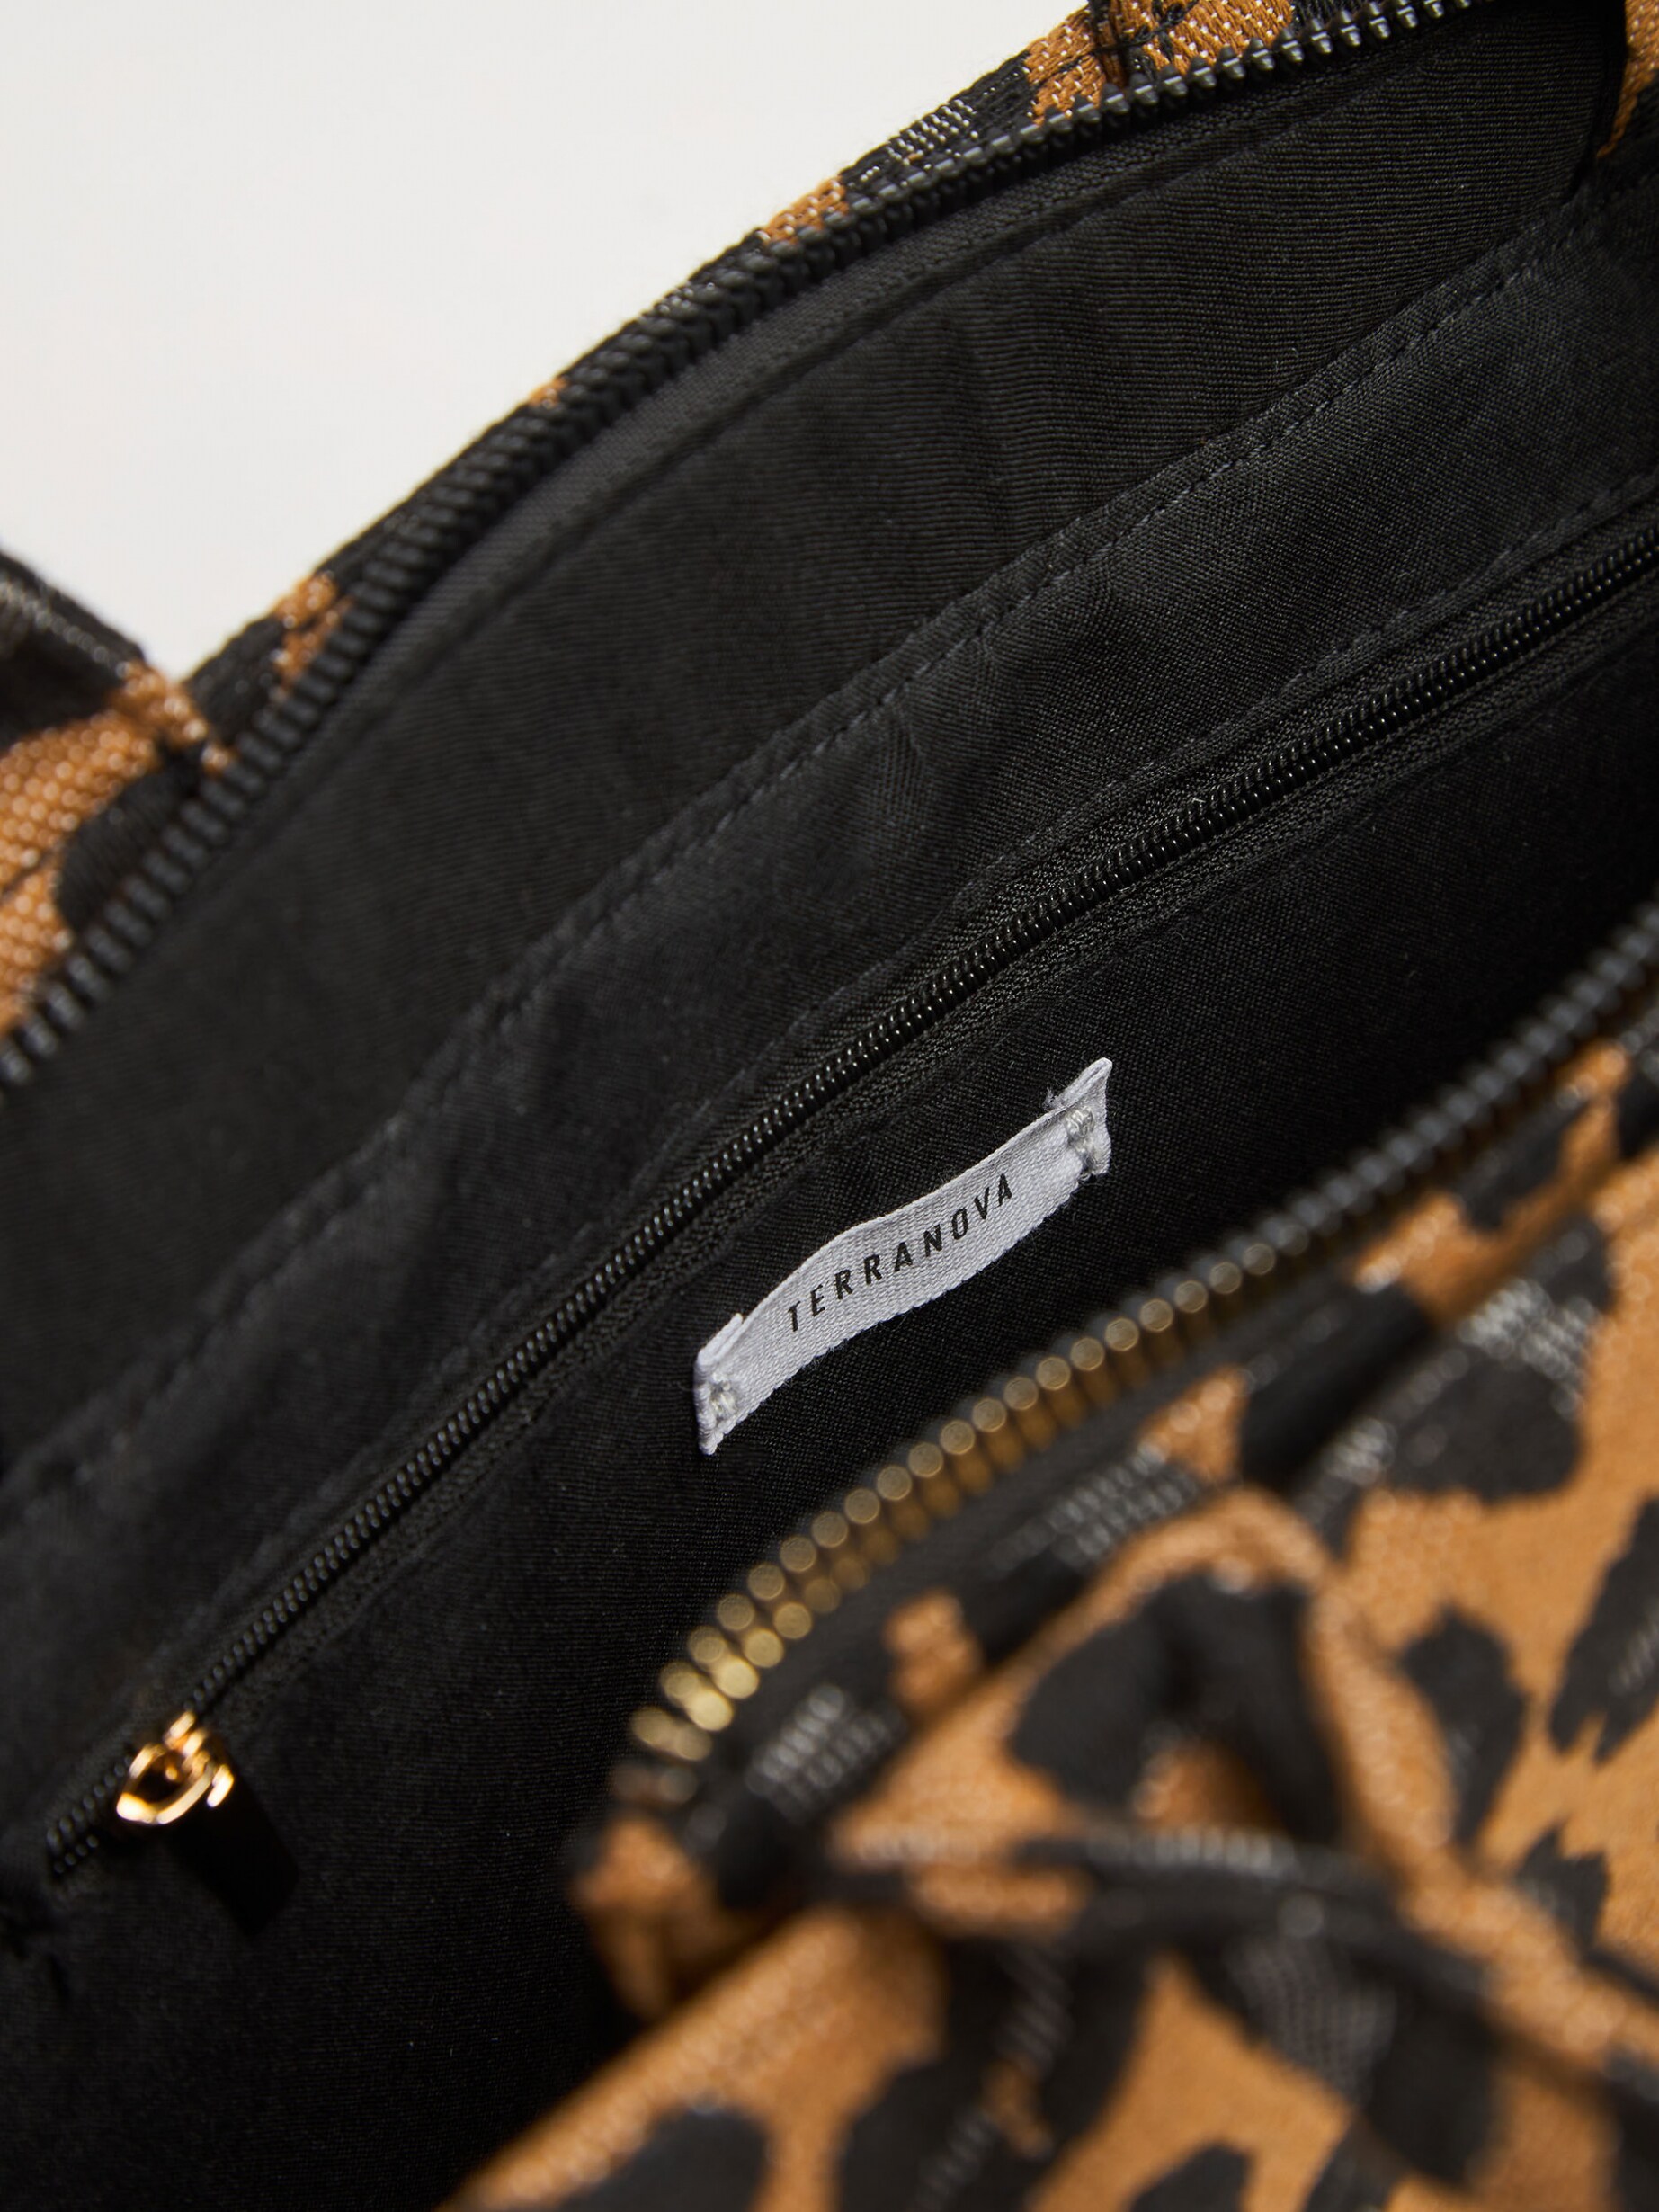 Tote leather bag, shoulder Bag, Terra Nova vacation Bag в интернет-магазине  на Ярмарке Мастеров | Tote Bag, Dubna - доставка по России. Товар продан.